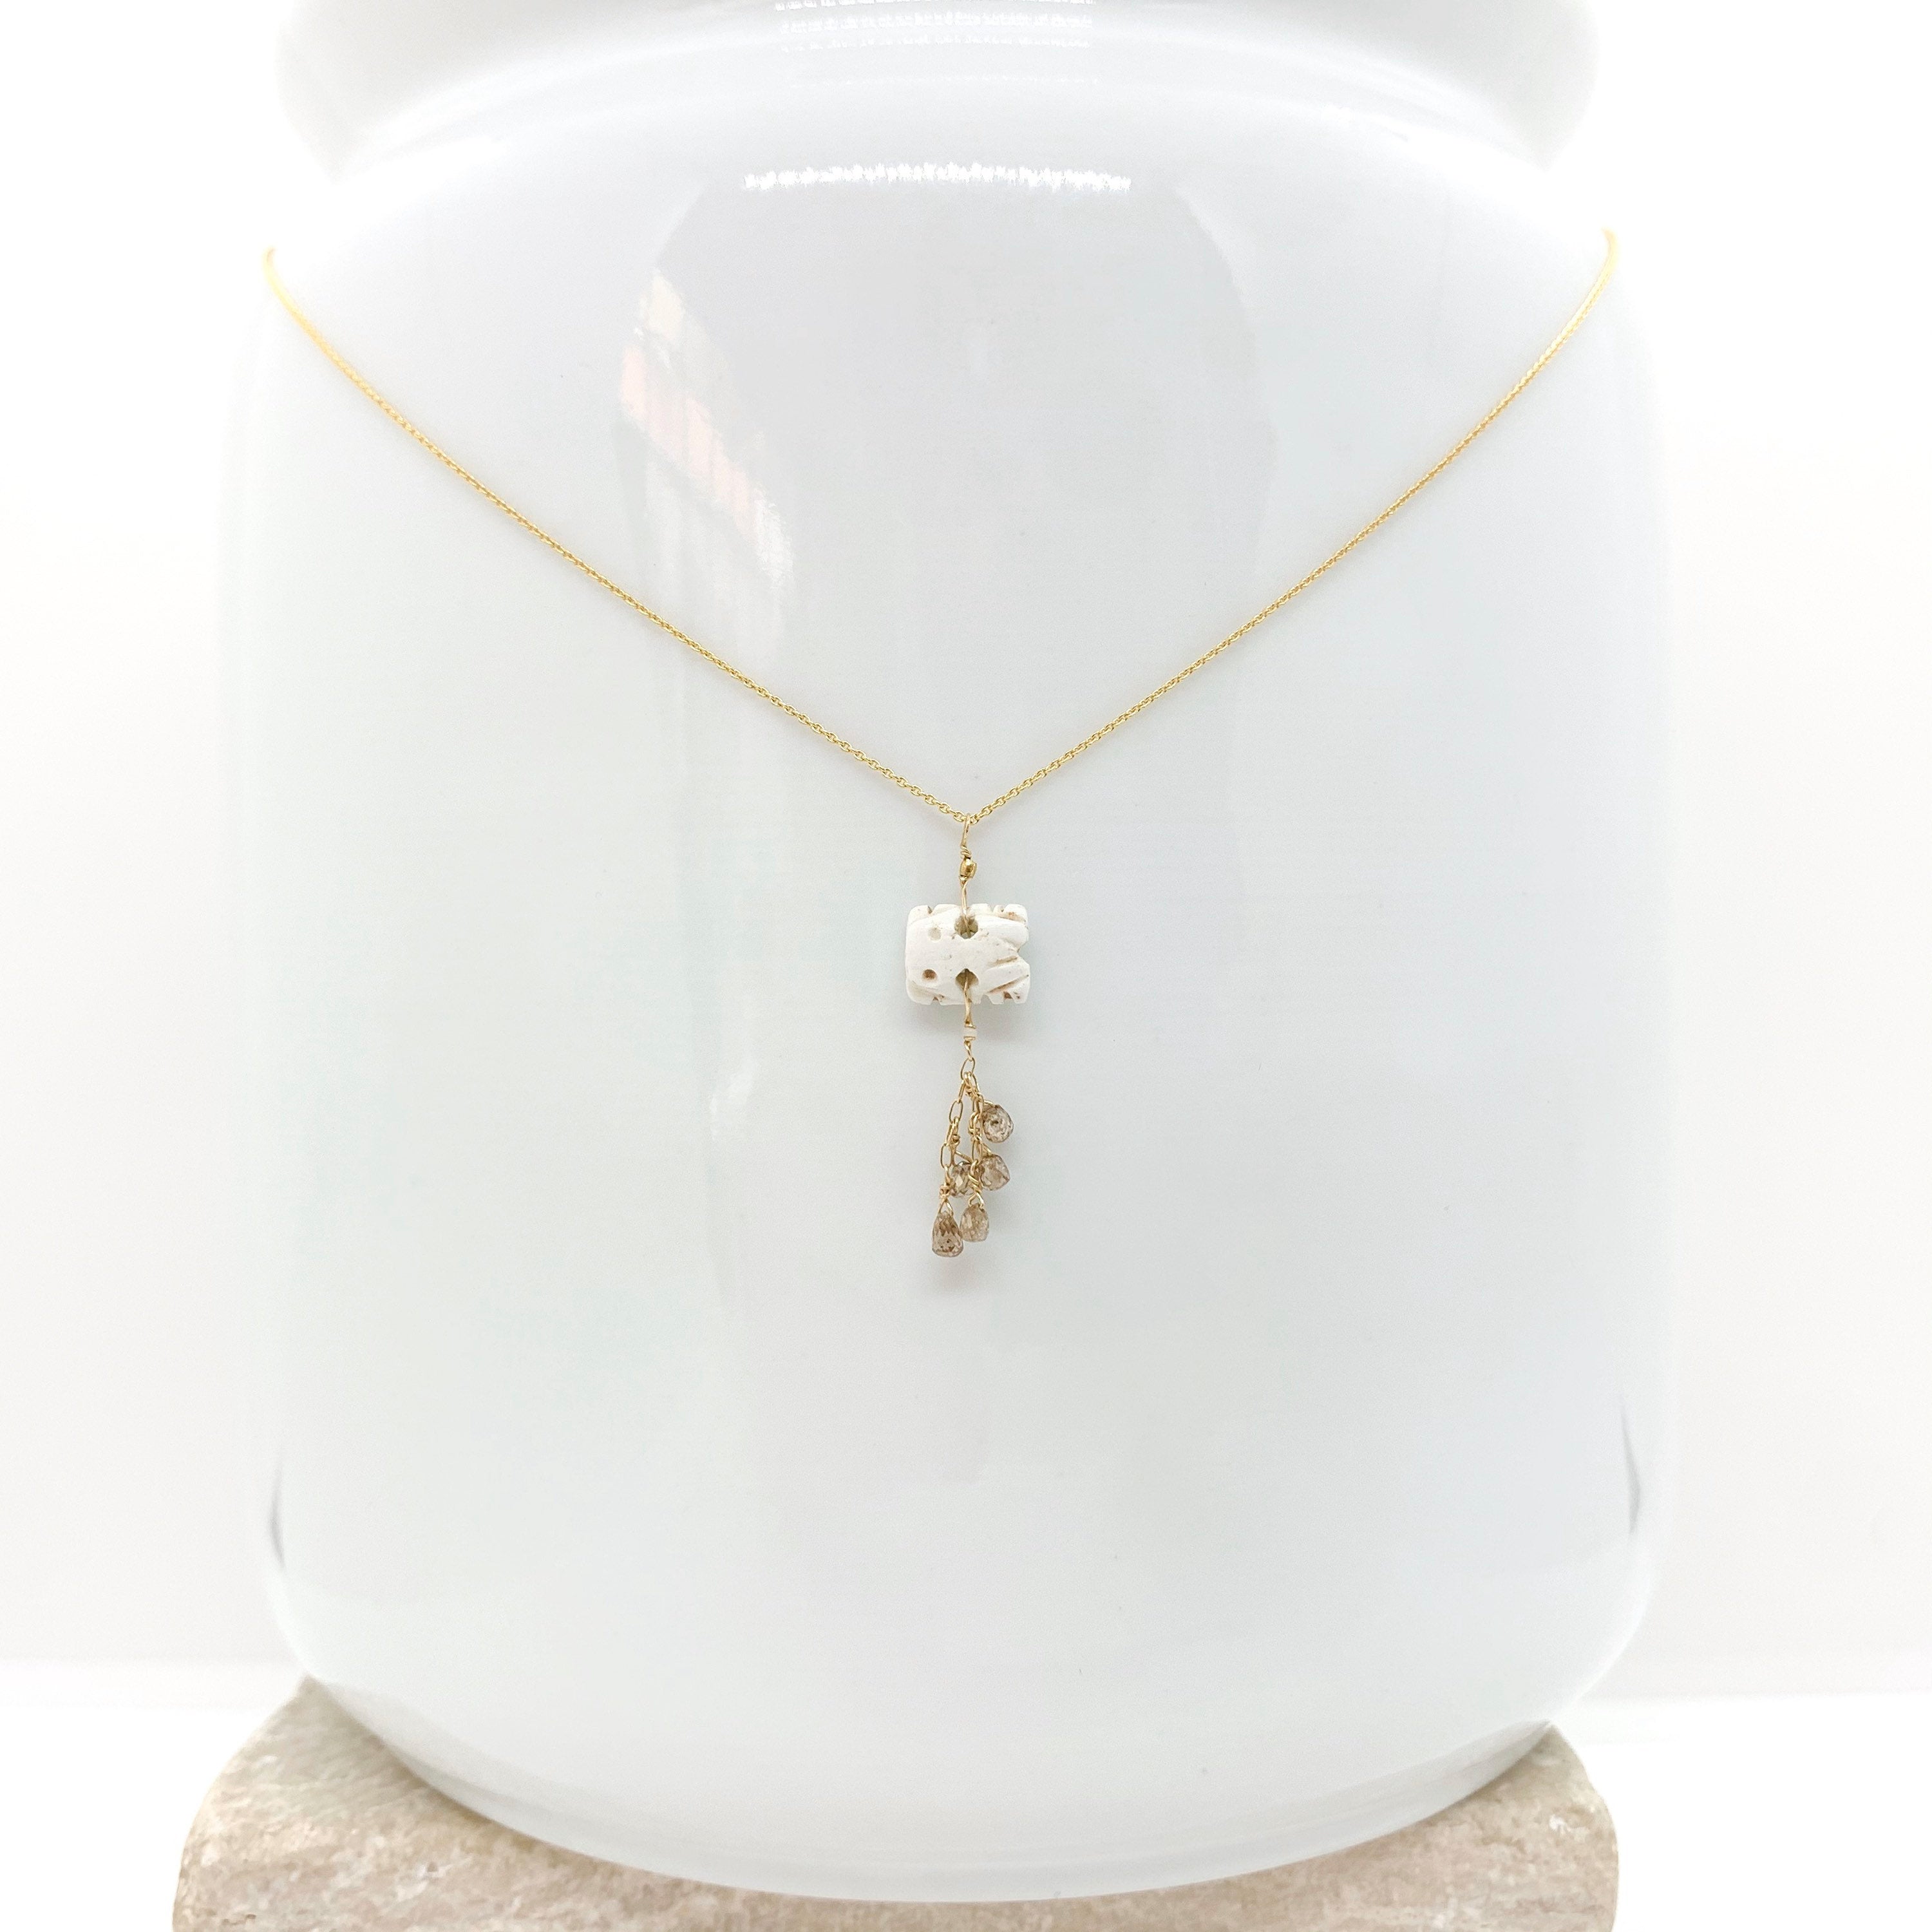 Pre-Columbian Bone Necklace - Antique Italian Bead - Frog Charm Necklace - Necklace For Women - White Diamond Beads - Gem Stone Pendant